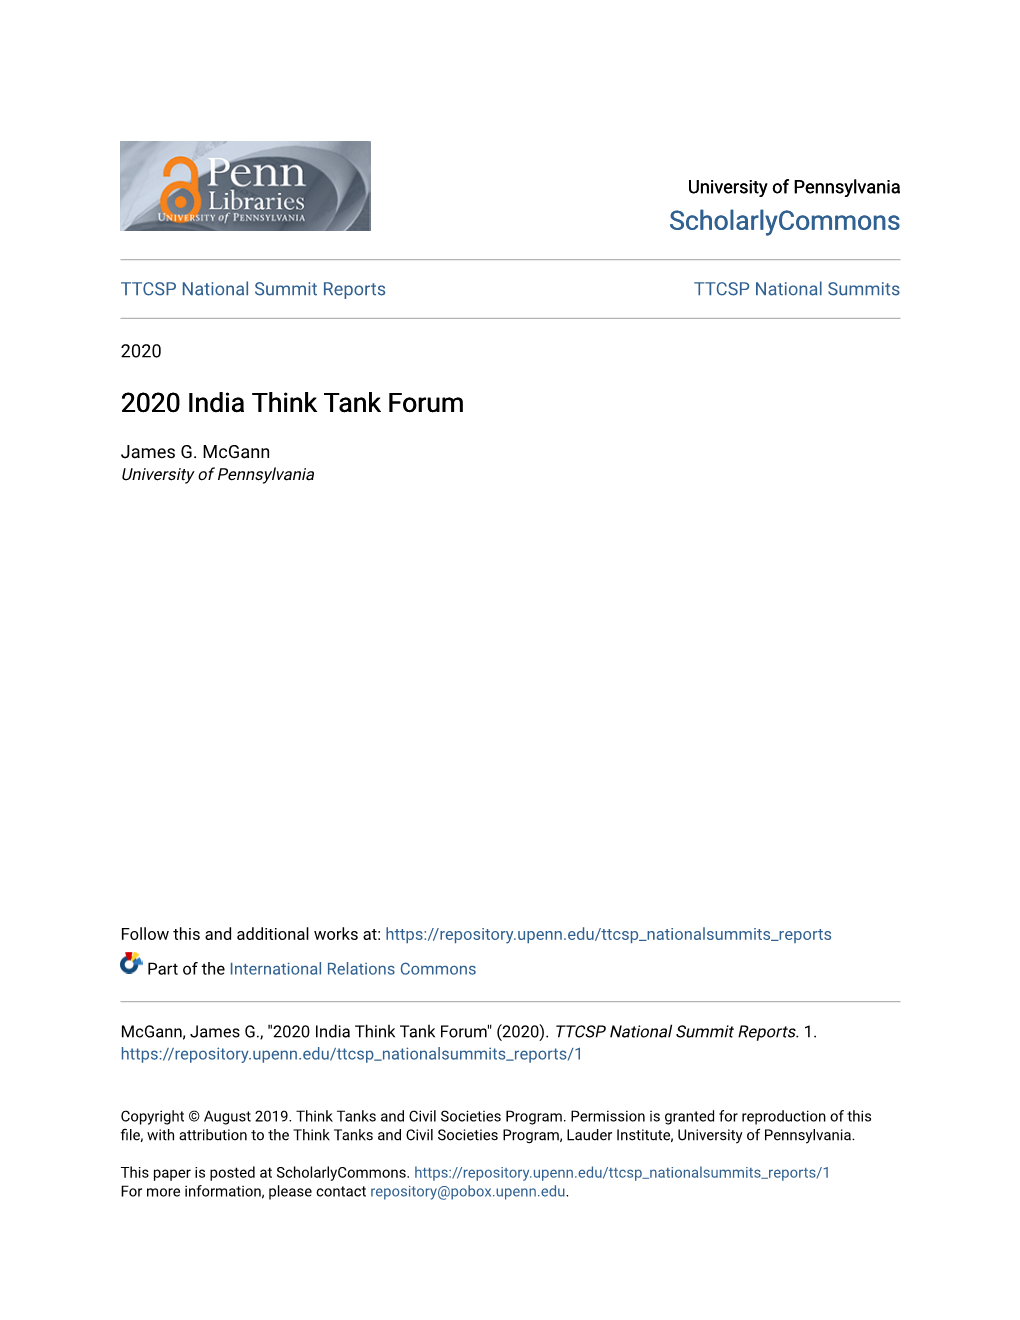 2020 India Think Tank Forum